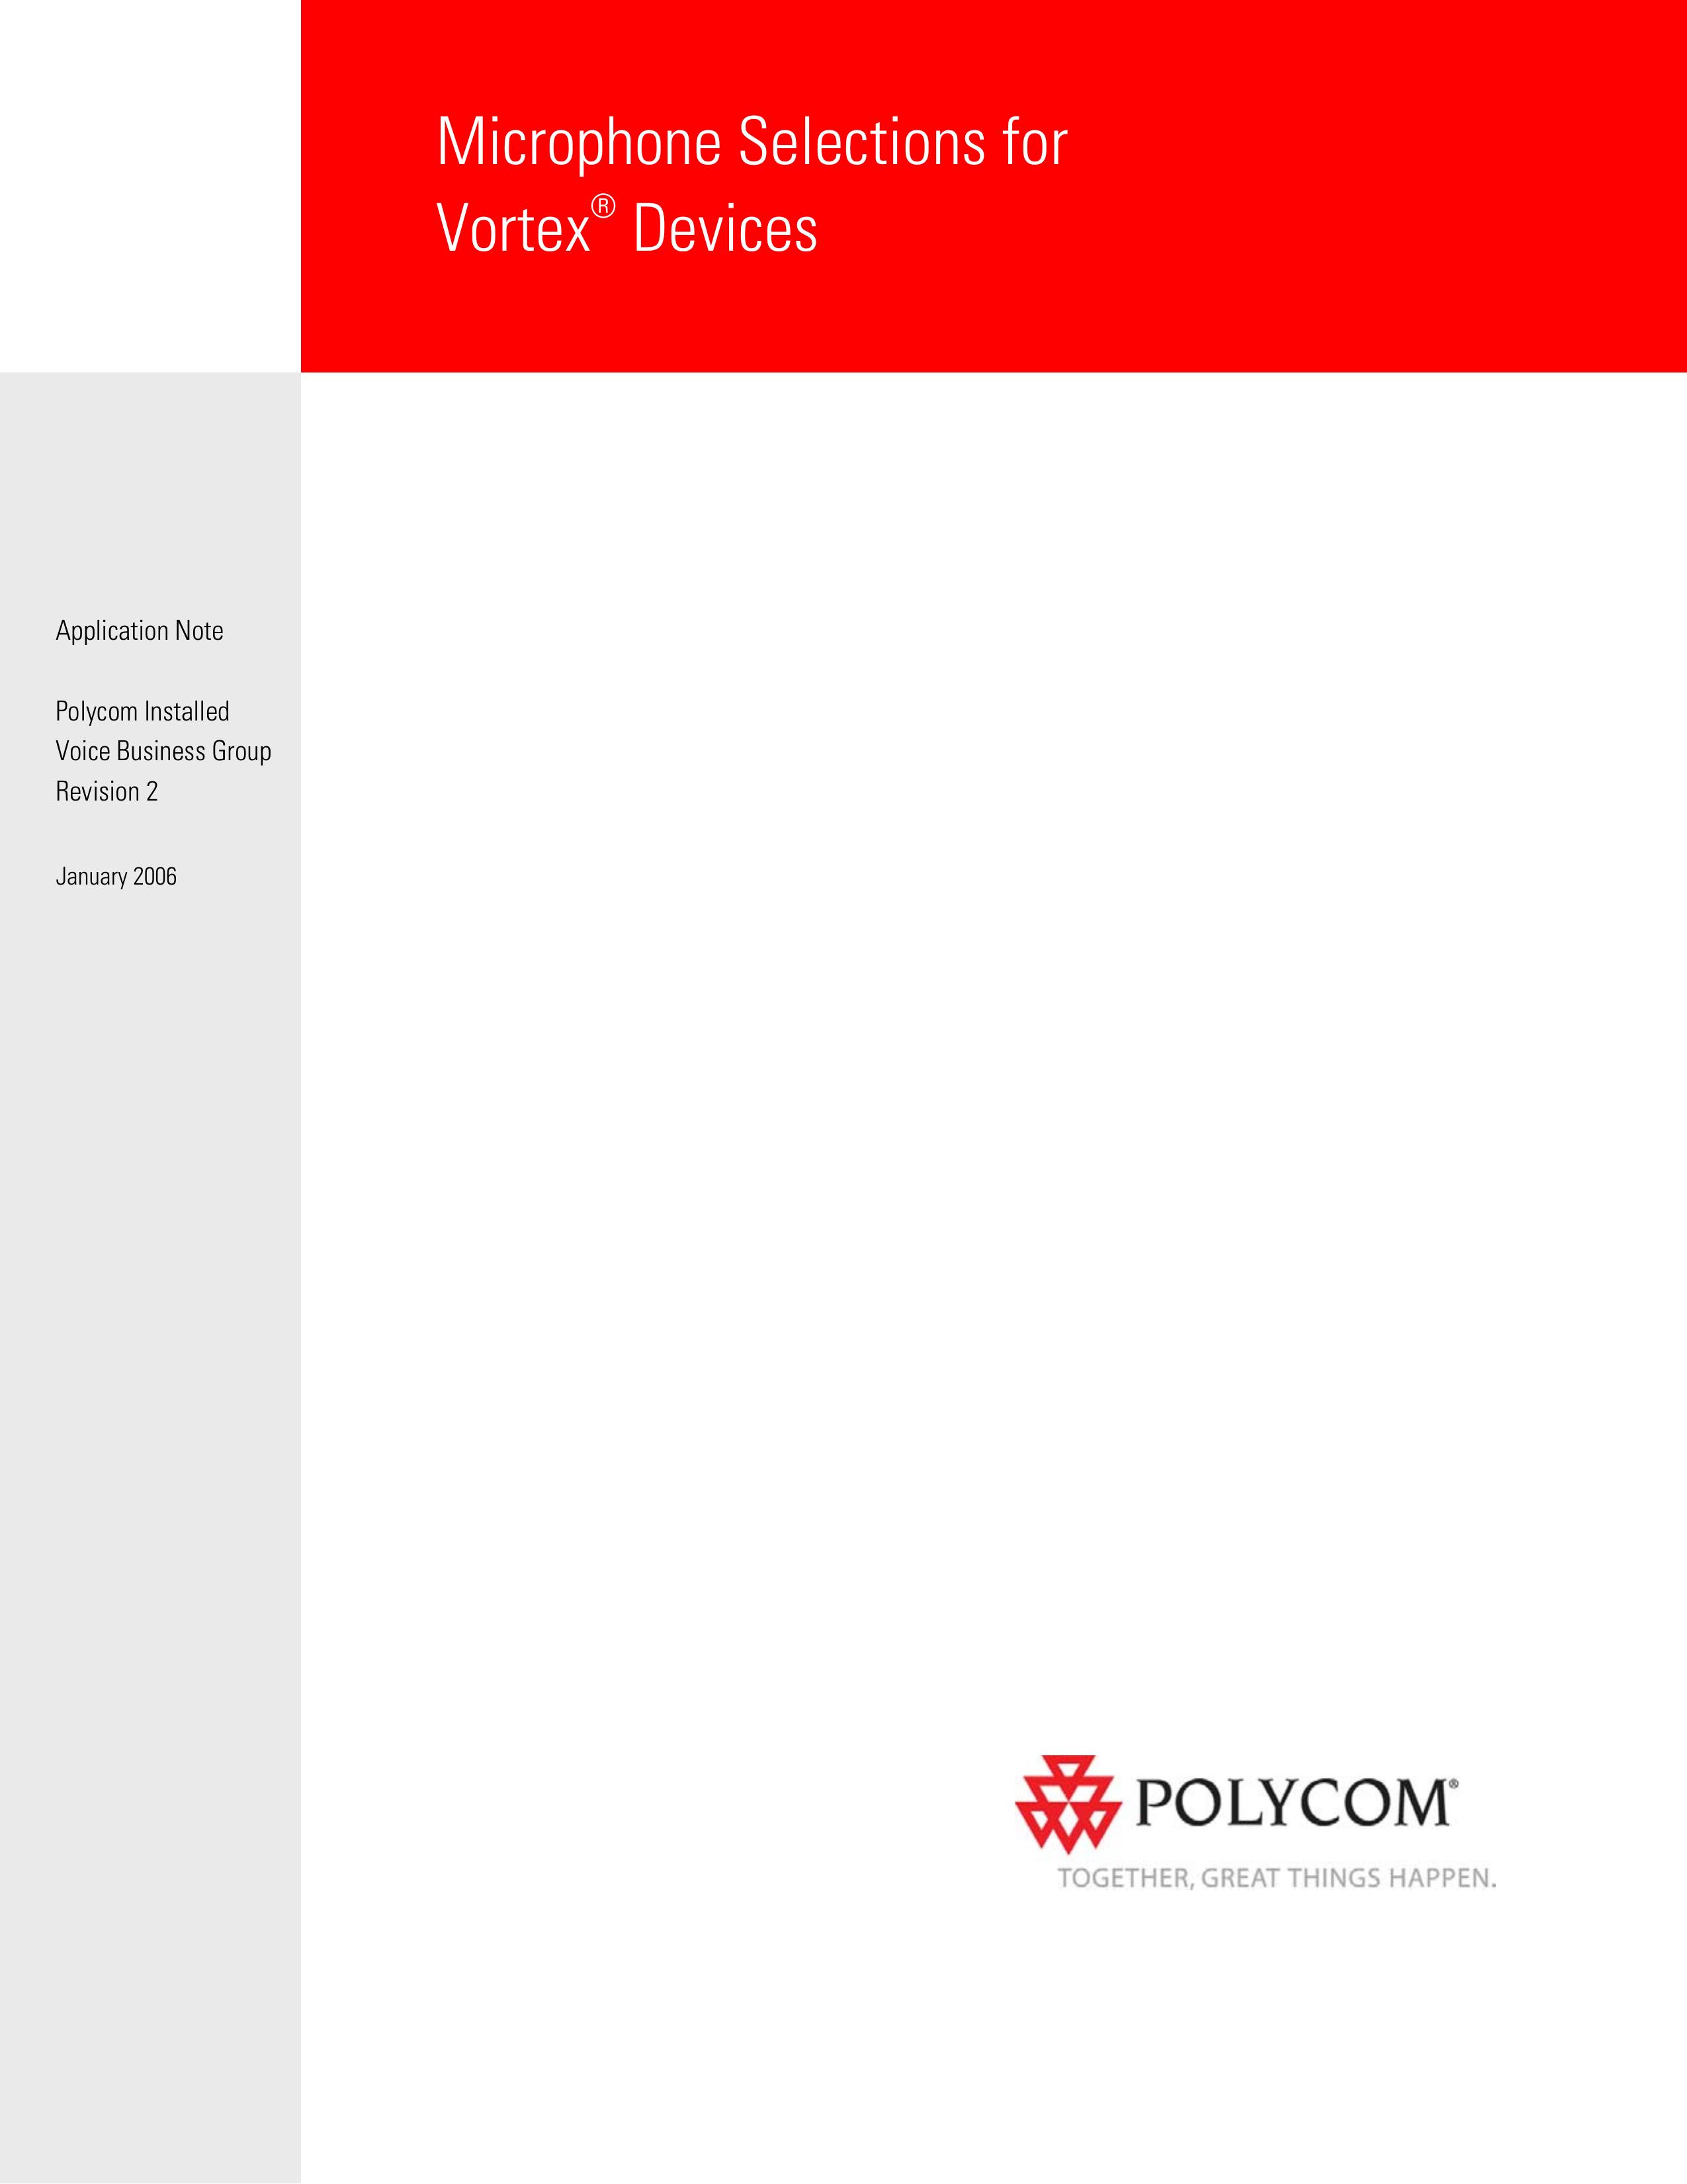 Polycom Vortex Microphone User Manual